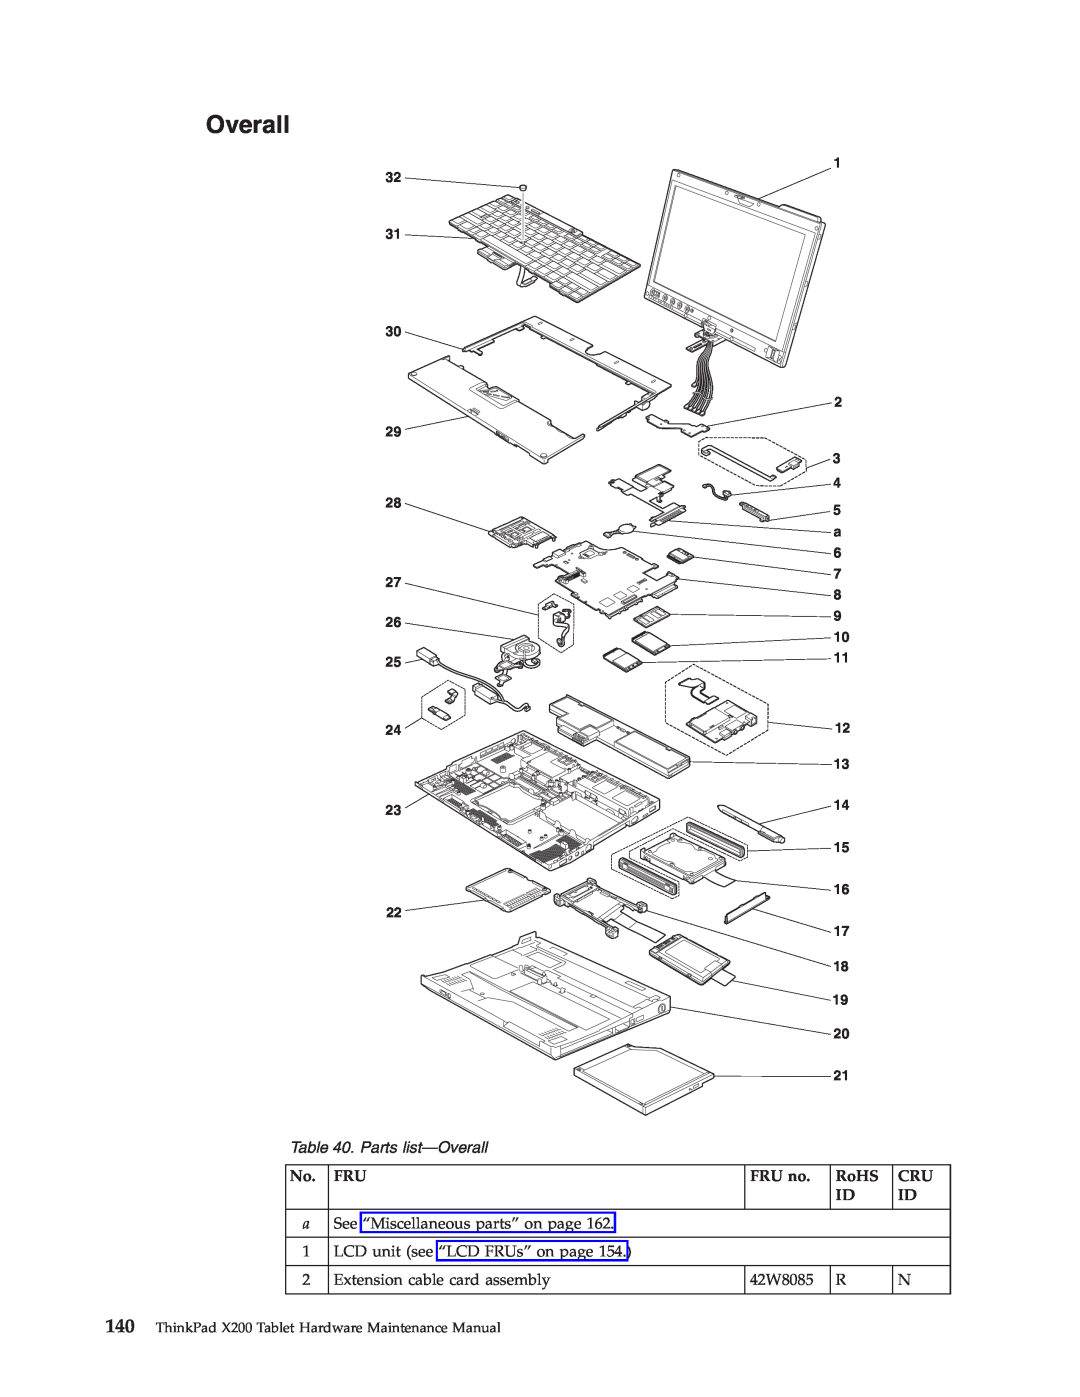 Lenovo X200 manual Parts list—Overall, FRU no, RoHS, 1 32 